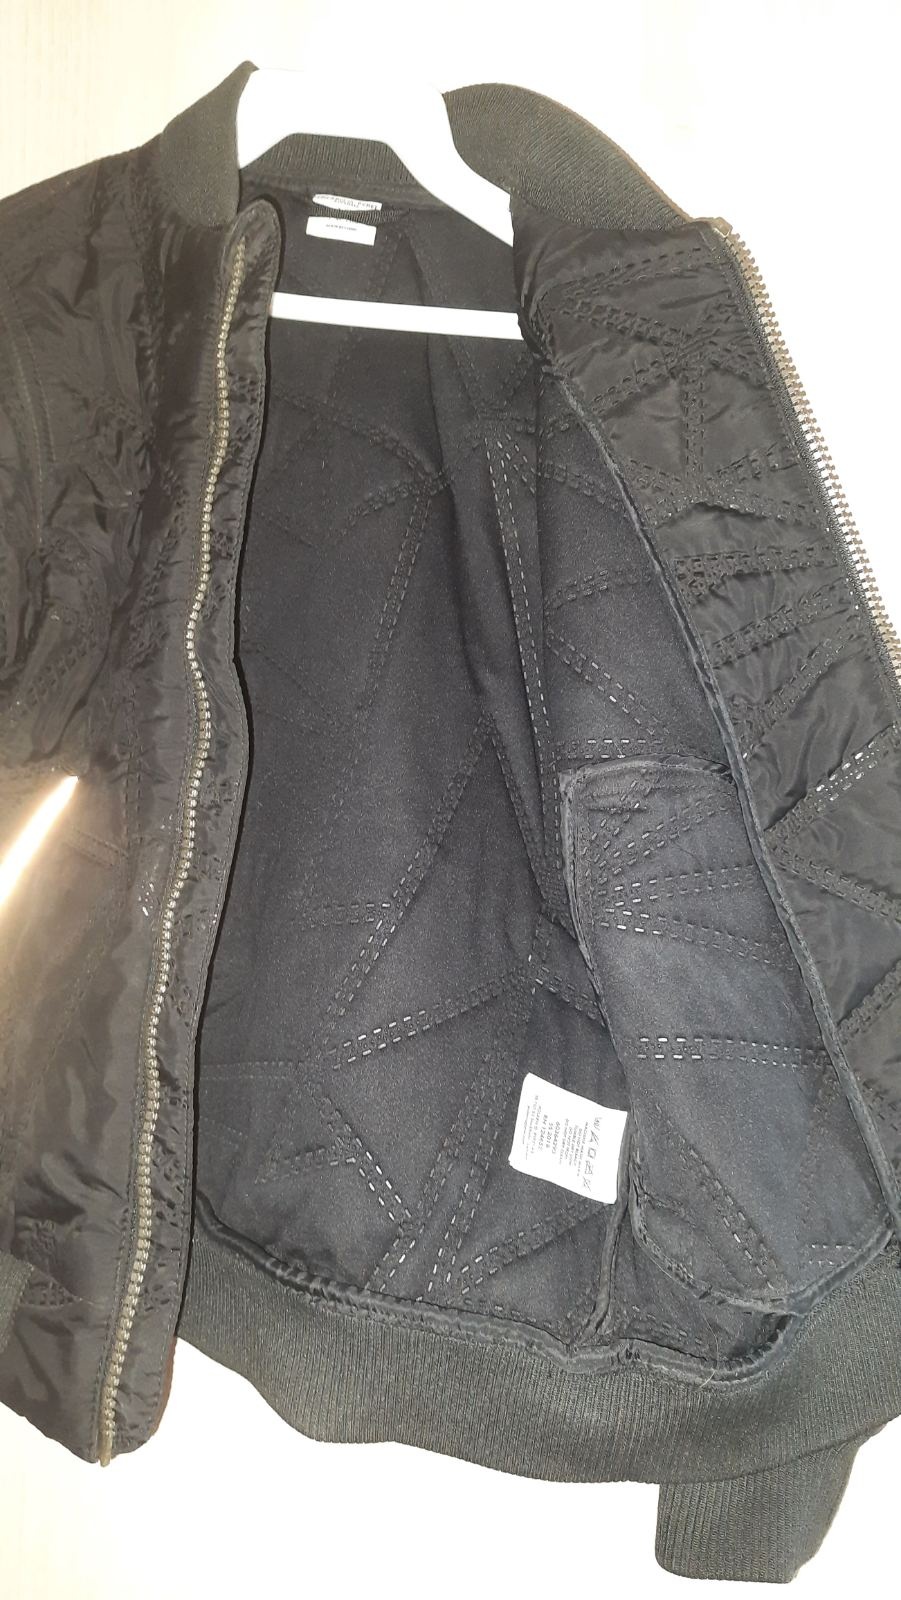 Курточка на мальчика Рolarn o pyret 120-130 см